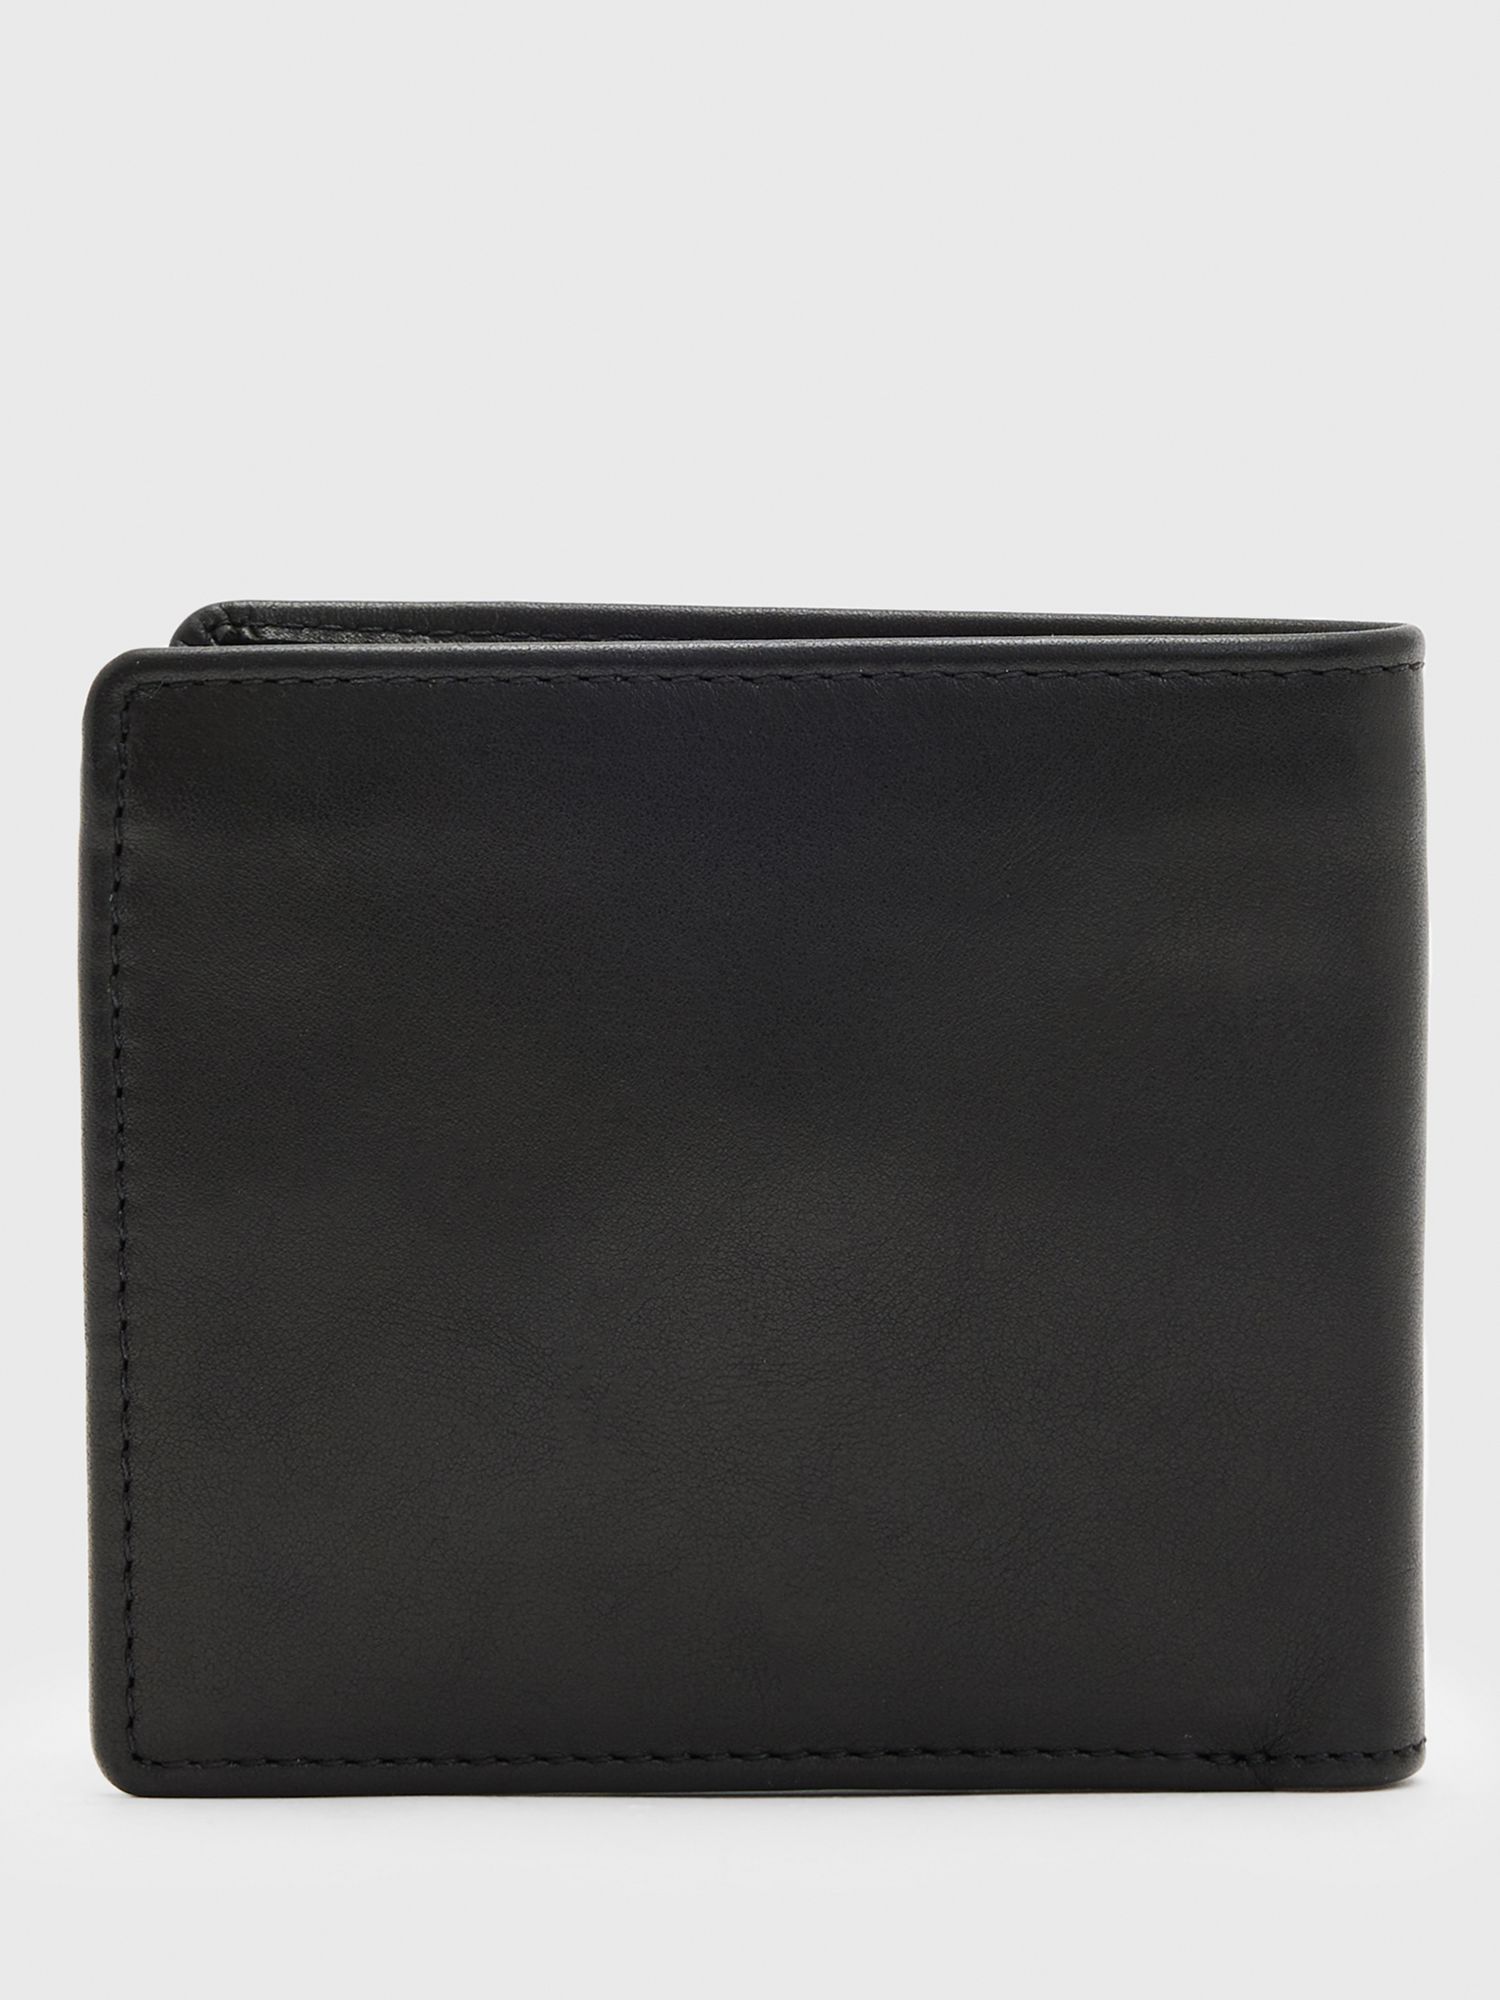 AllSaints Blyth Wallet, Black, One Size